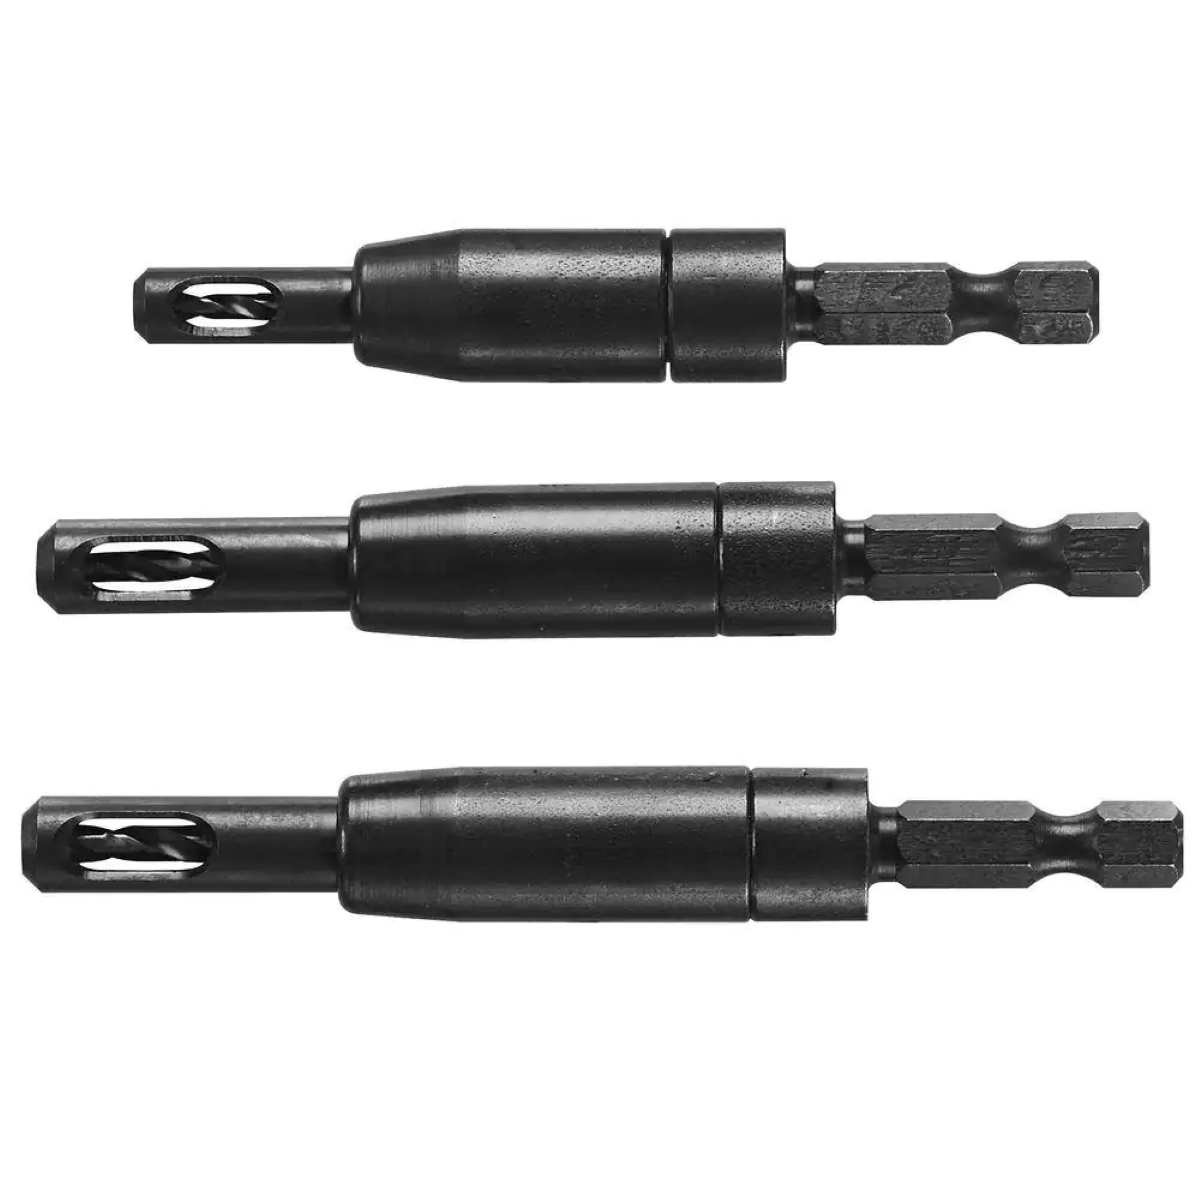 useful power drill attachments - three black drill bits